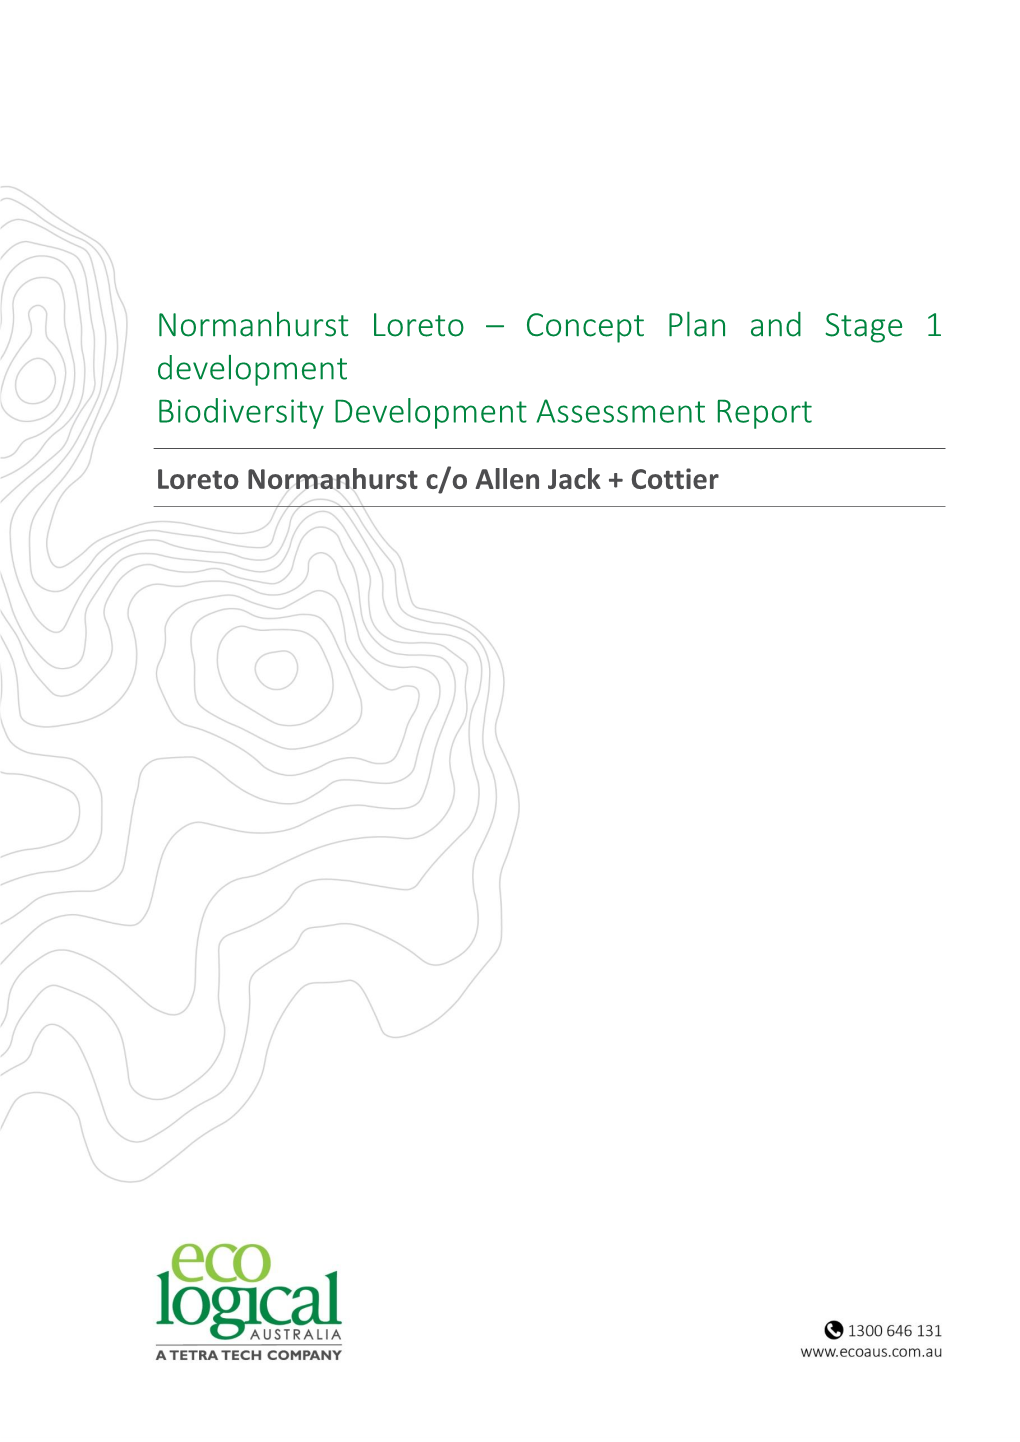 Normanhurst Loreto – Concept Plan and Stage 1 Development Biodiversity Development Assessment Report